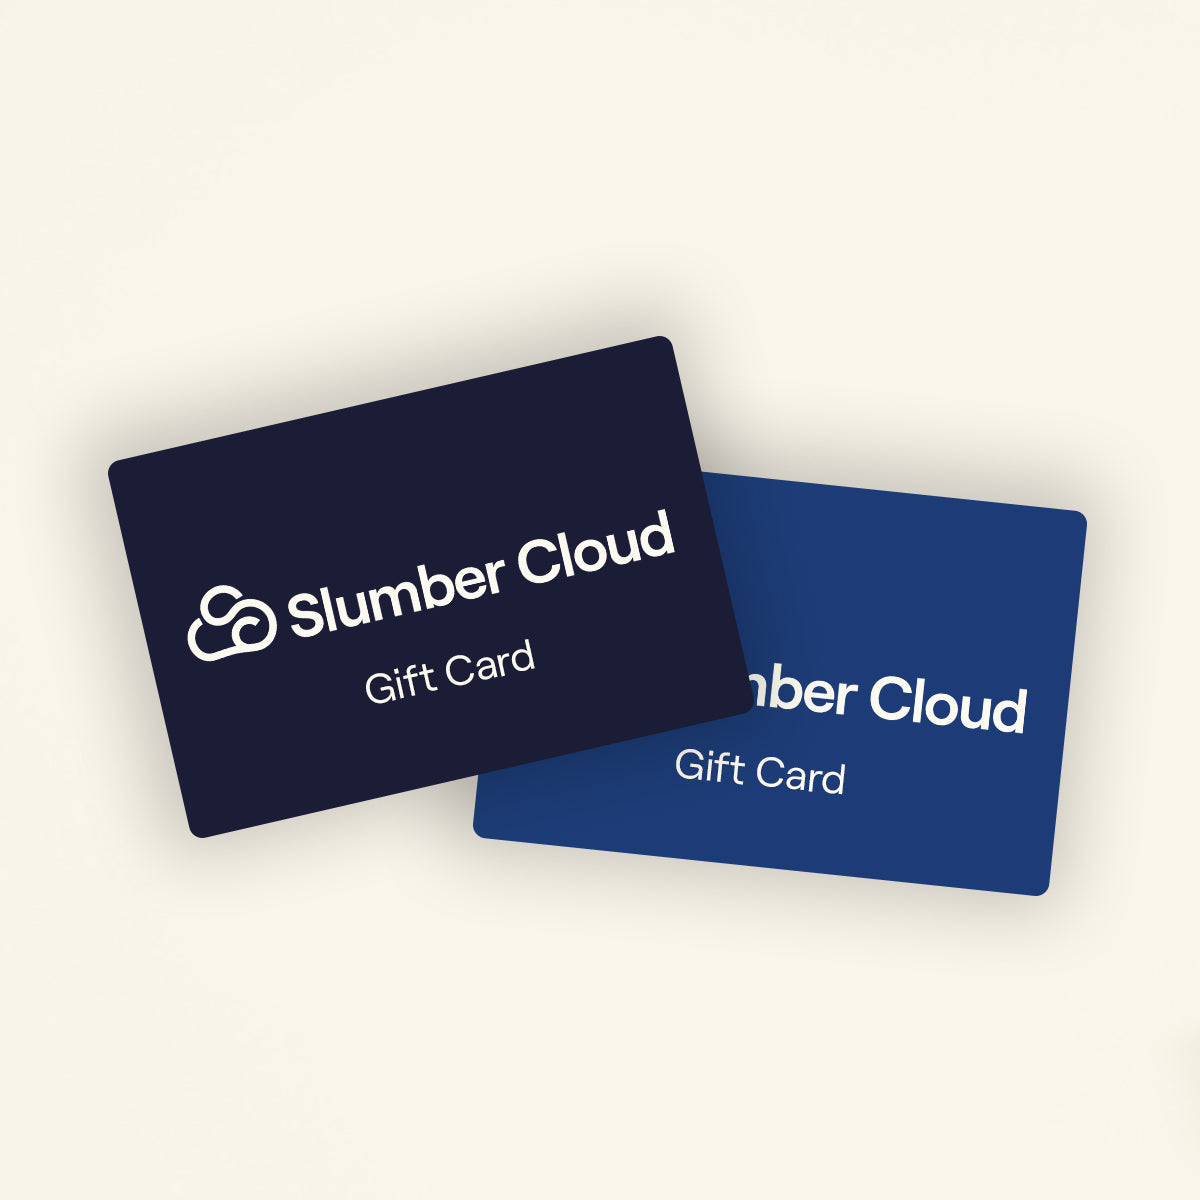 Slumber Cloud Gift Card